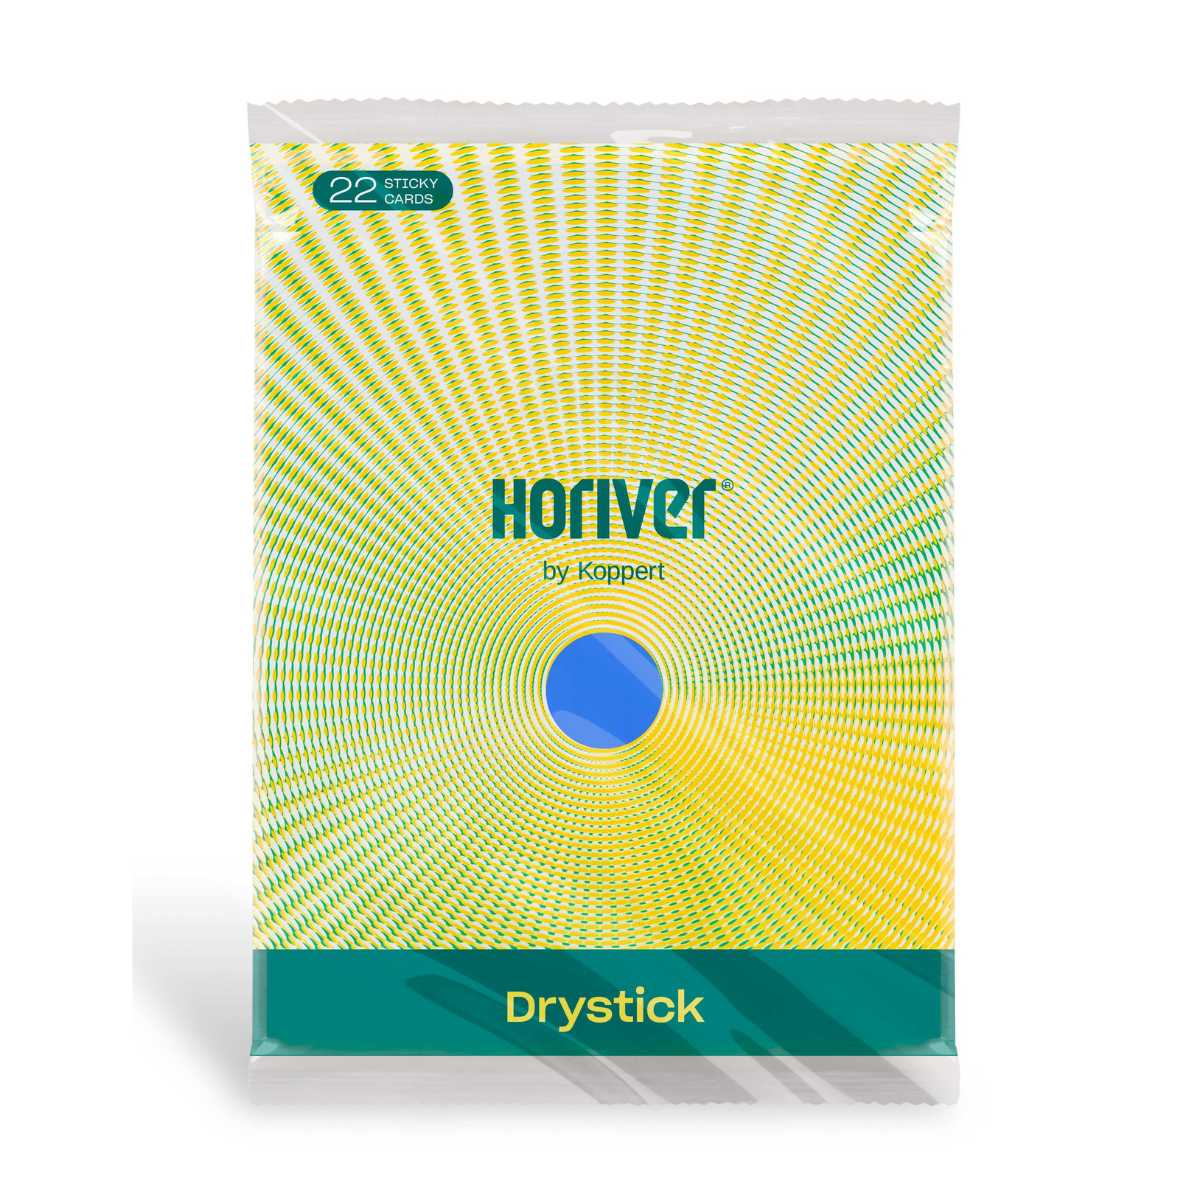 Horiver Drystick Cards